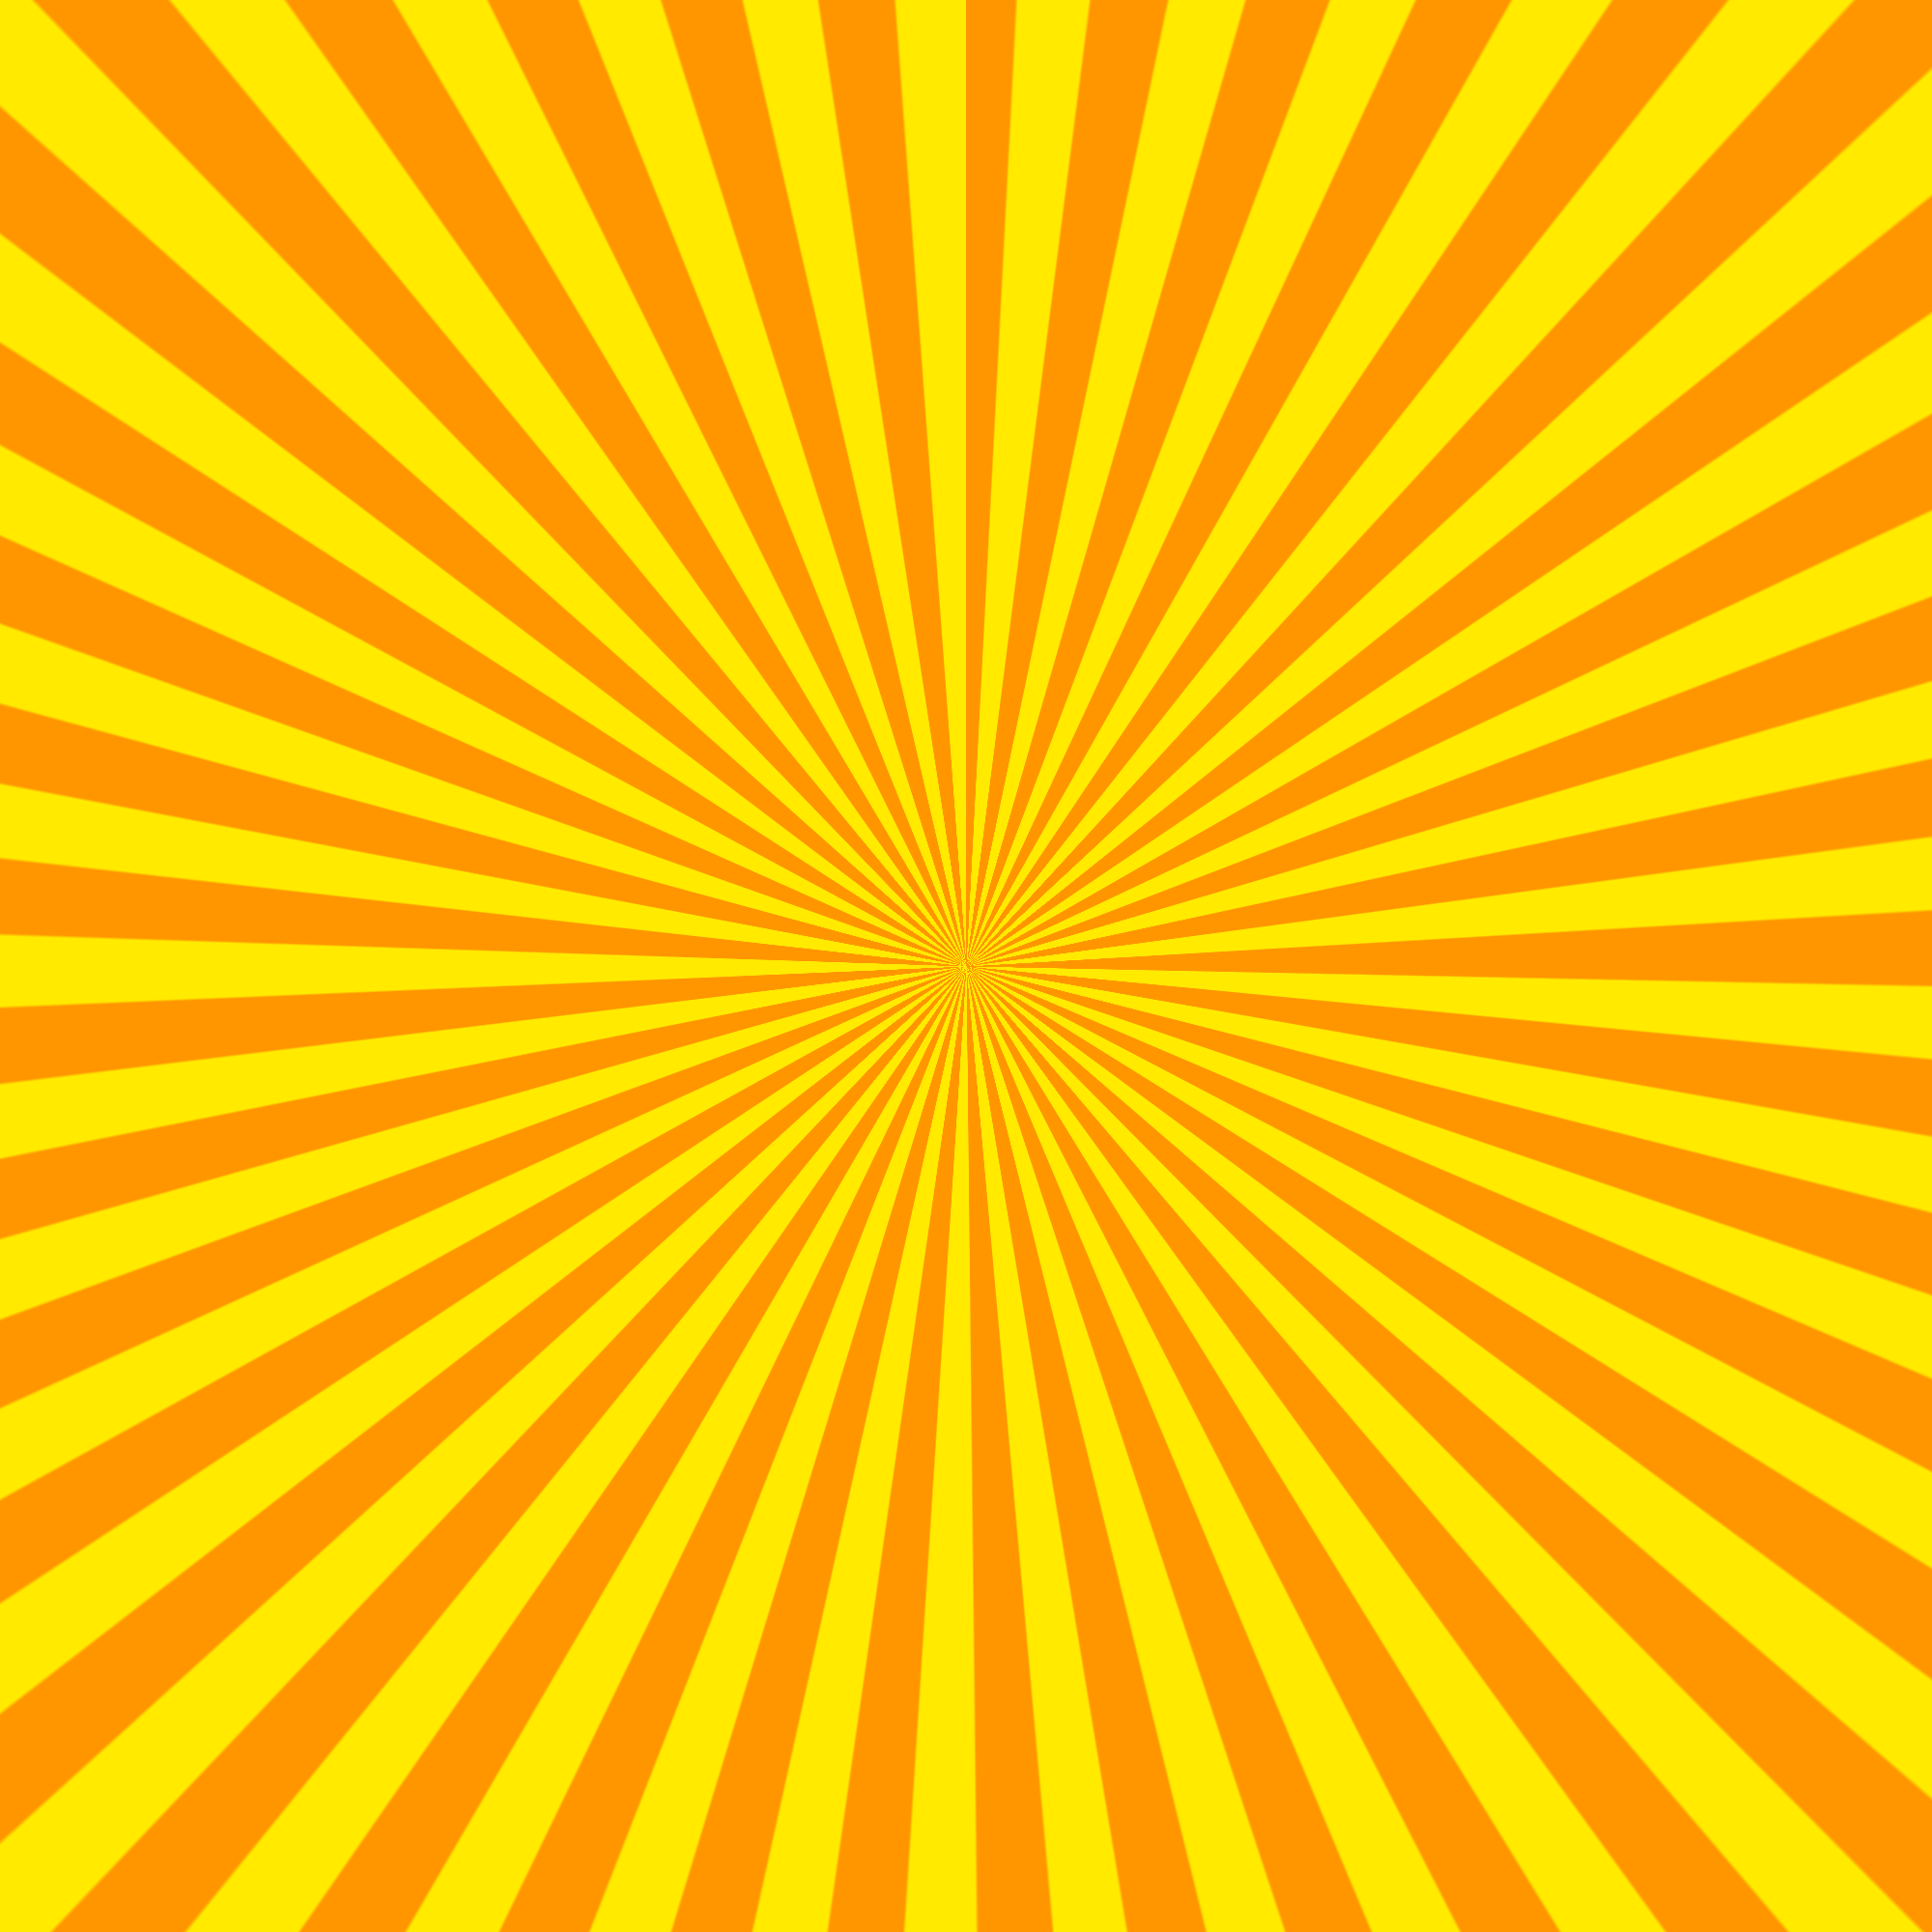 Sunburst Pattern Photoshop